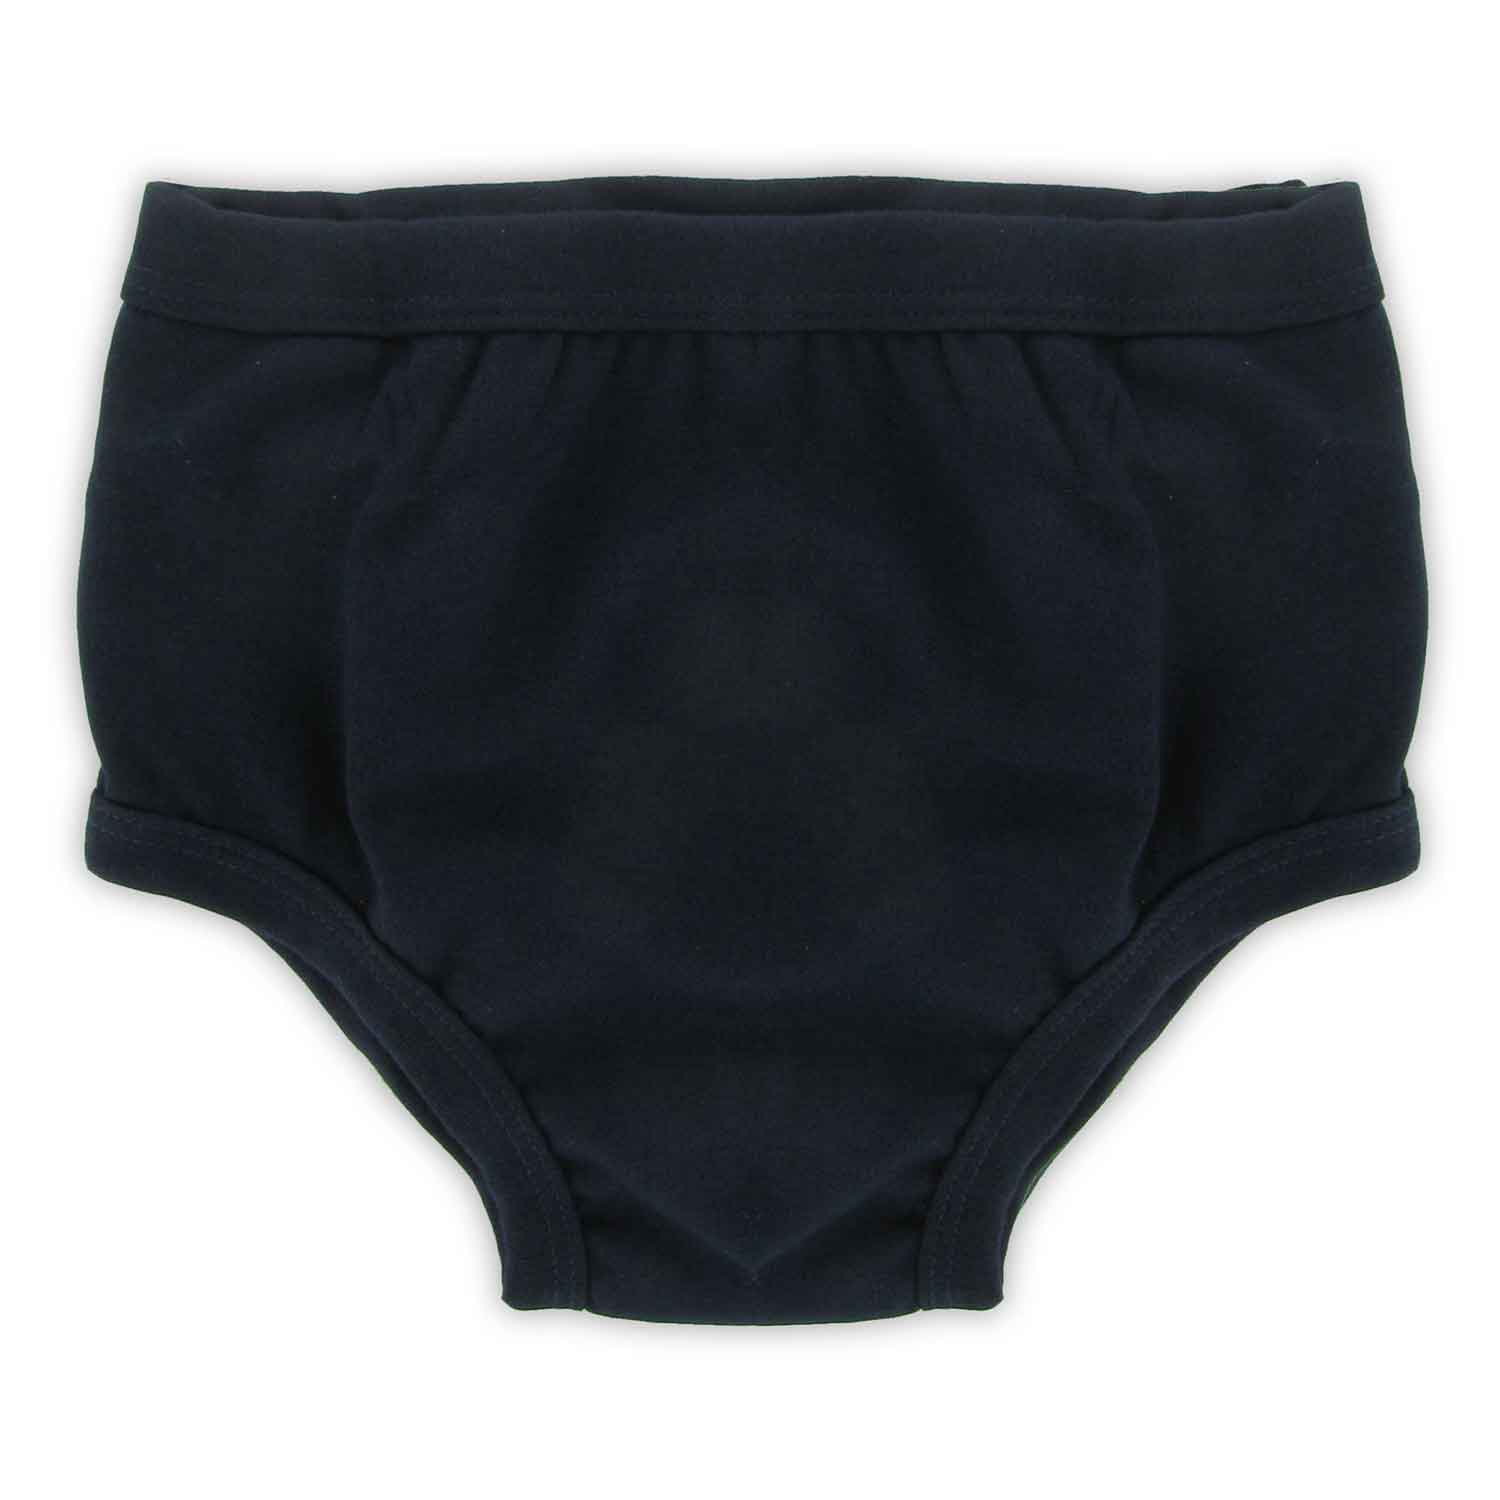 Allnites Overnight Underwear for Girls - S/M - Shop Training Pants